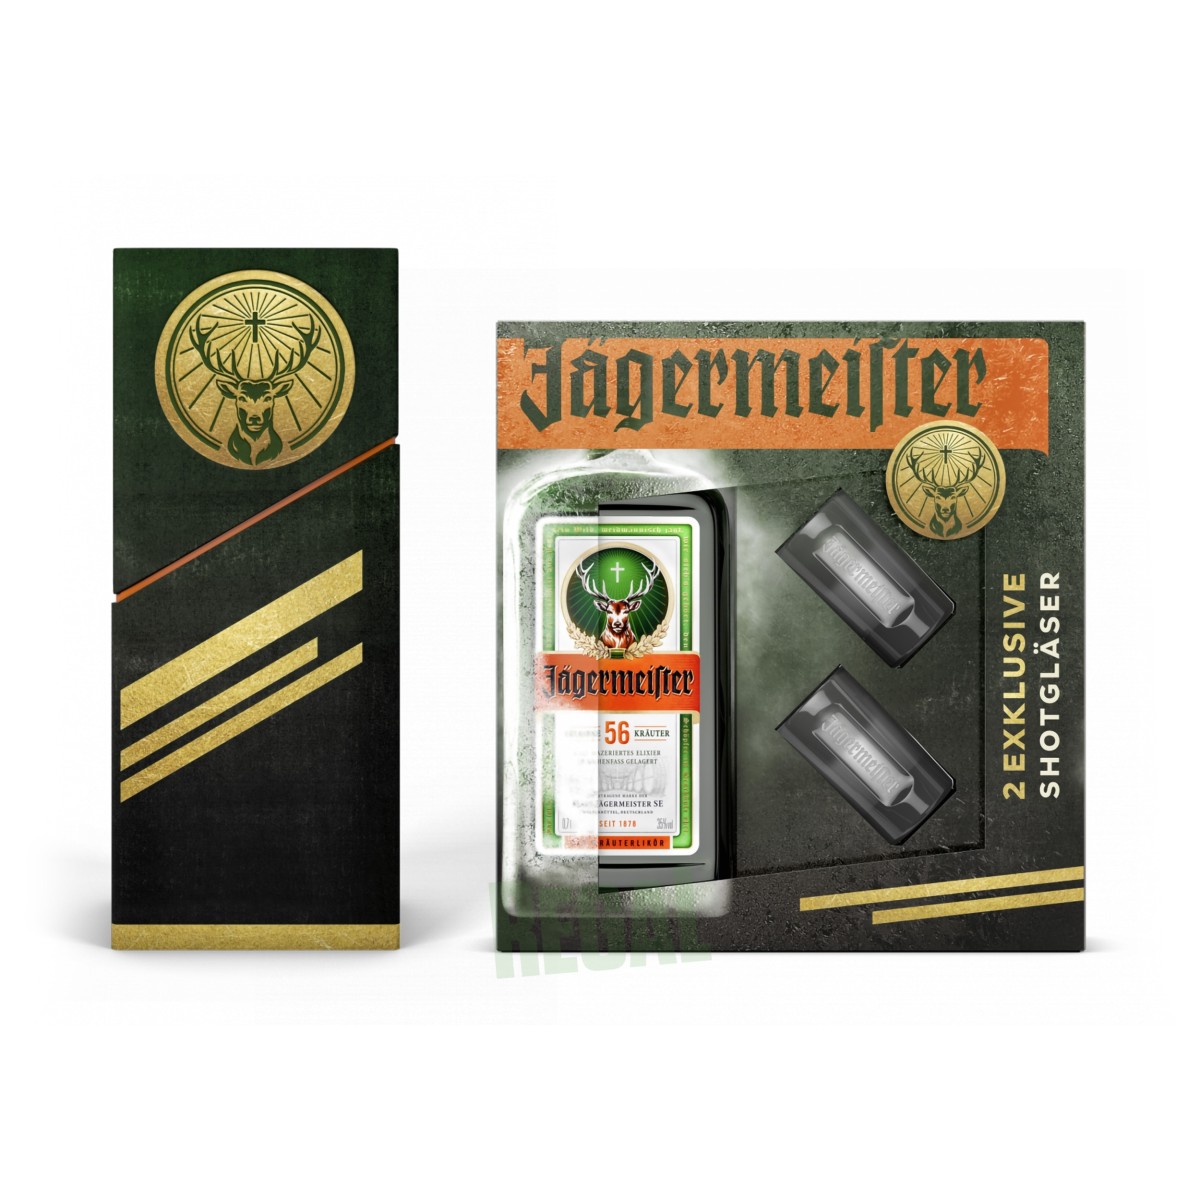 Jägermeister Kräuterlikör + 2 exklusive Shotgläser